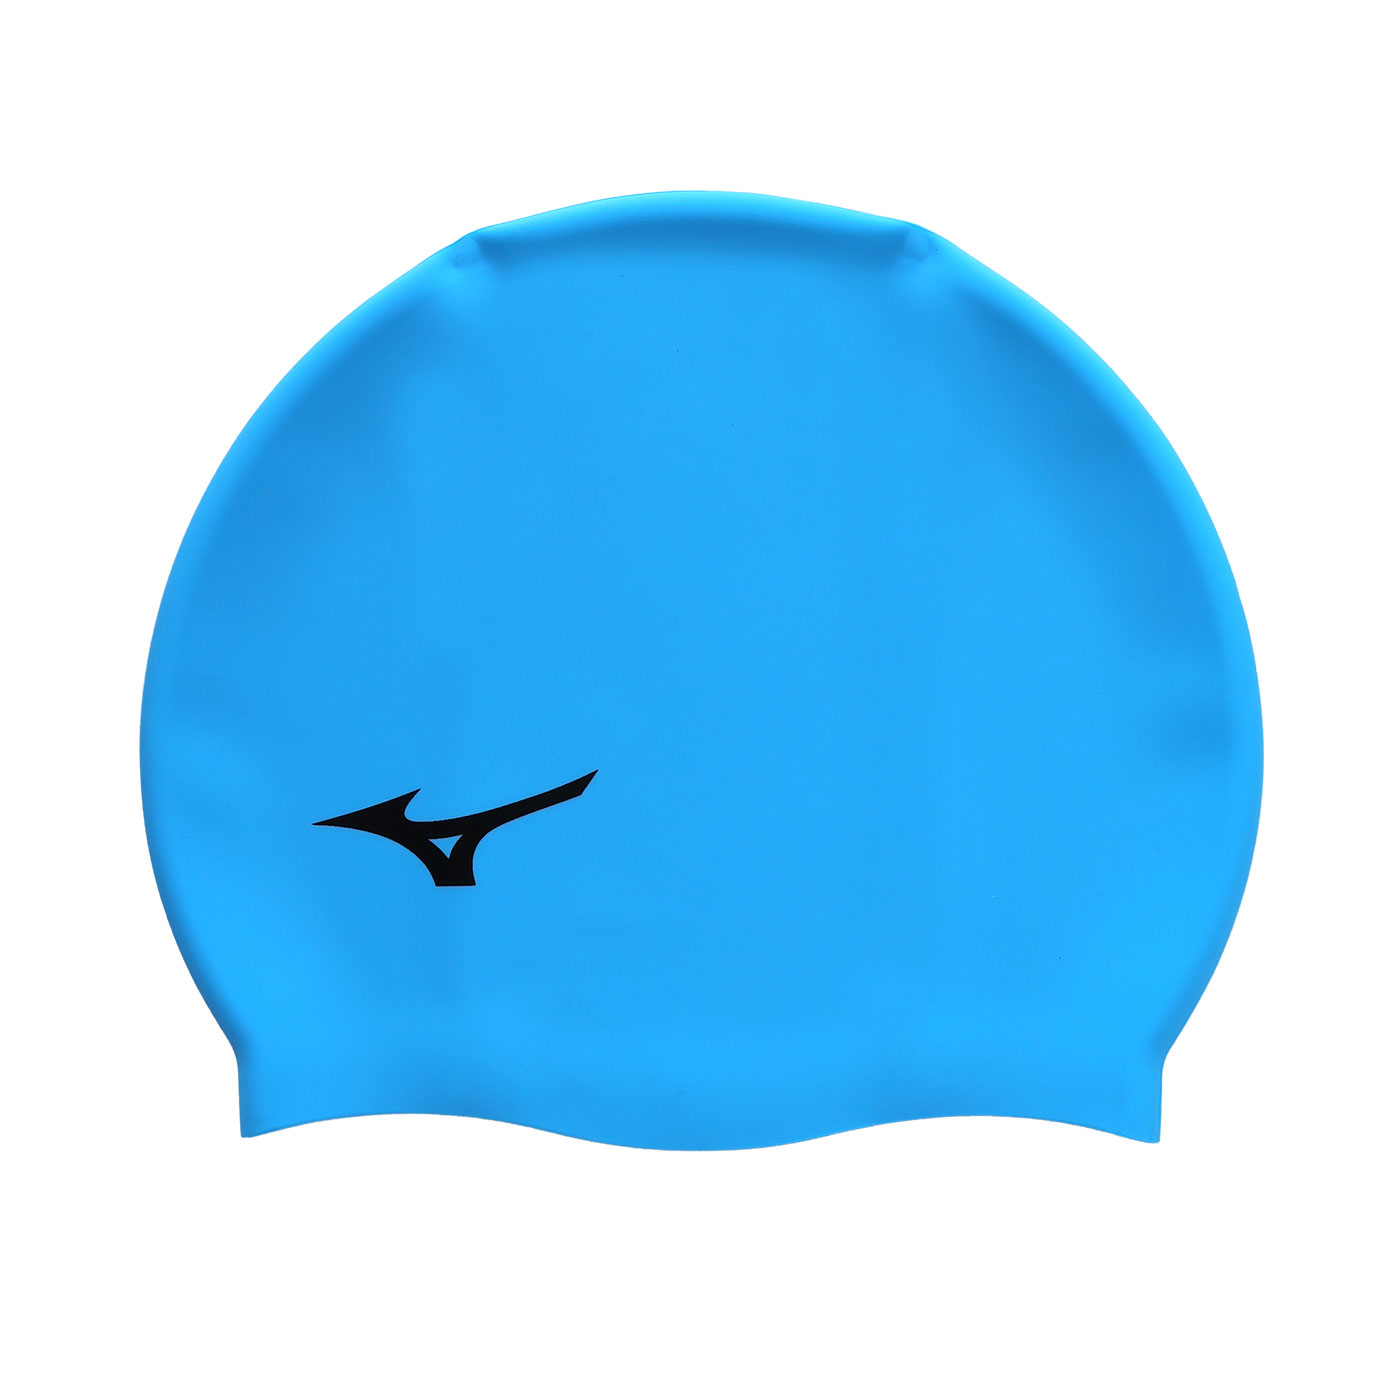 MIZUNO 矽膠泳帽  SWIM N2JWB91400-24 - 天藍黑